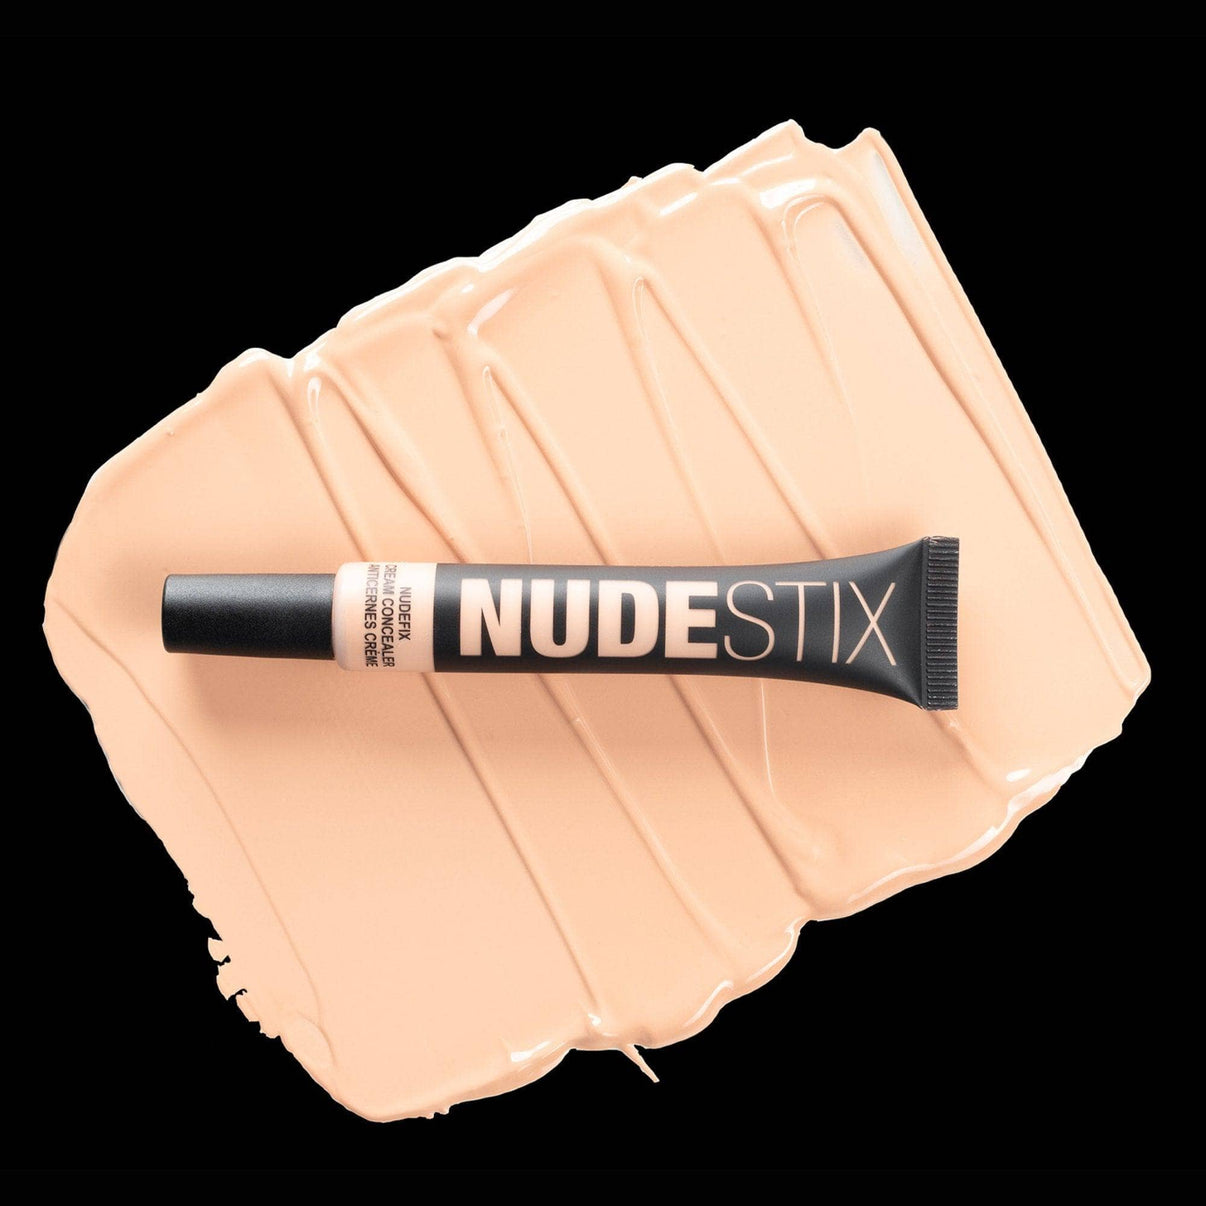 Nudefix cream concealer in shade nude 3 on top of texture swatch